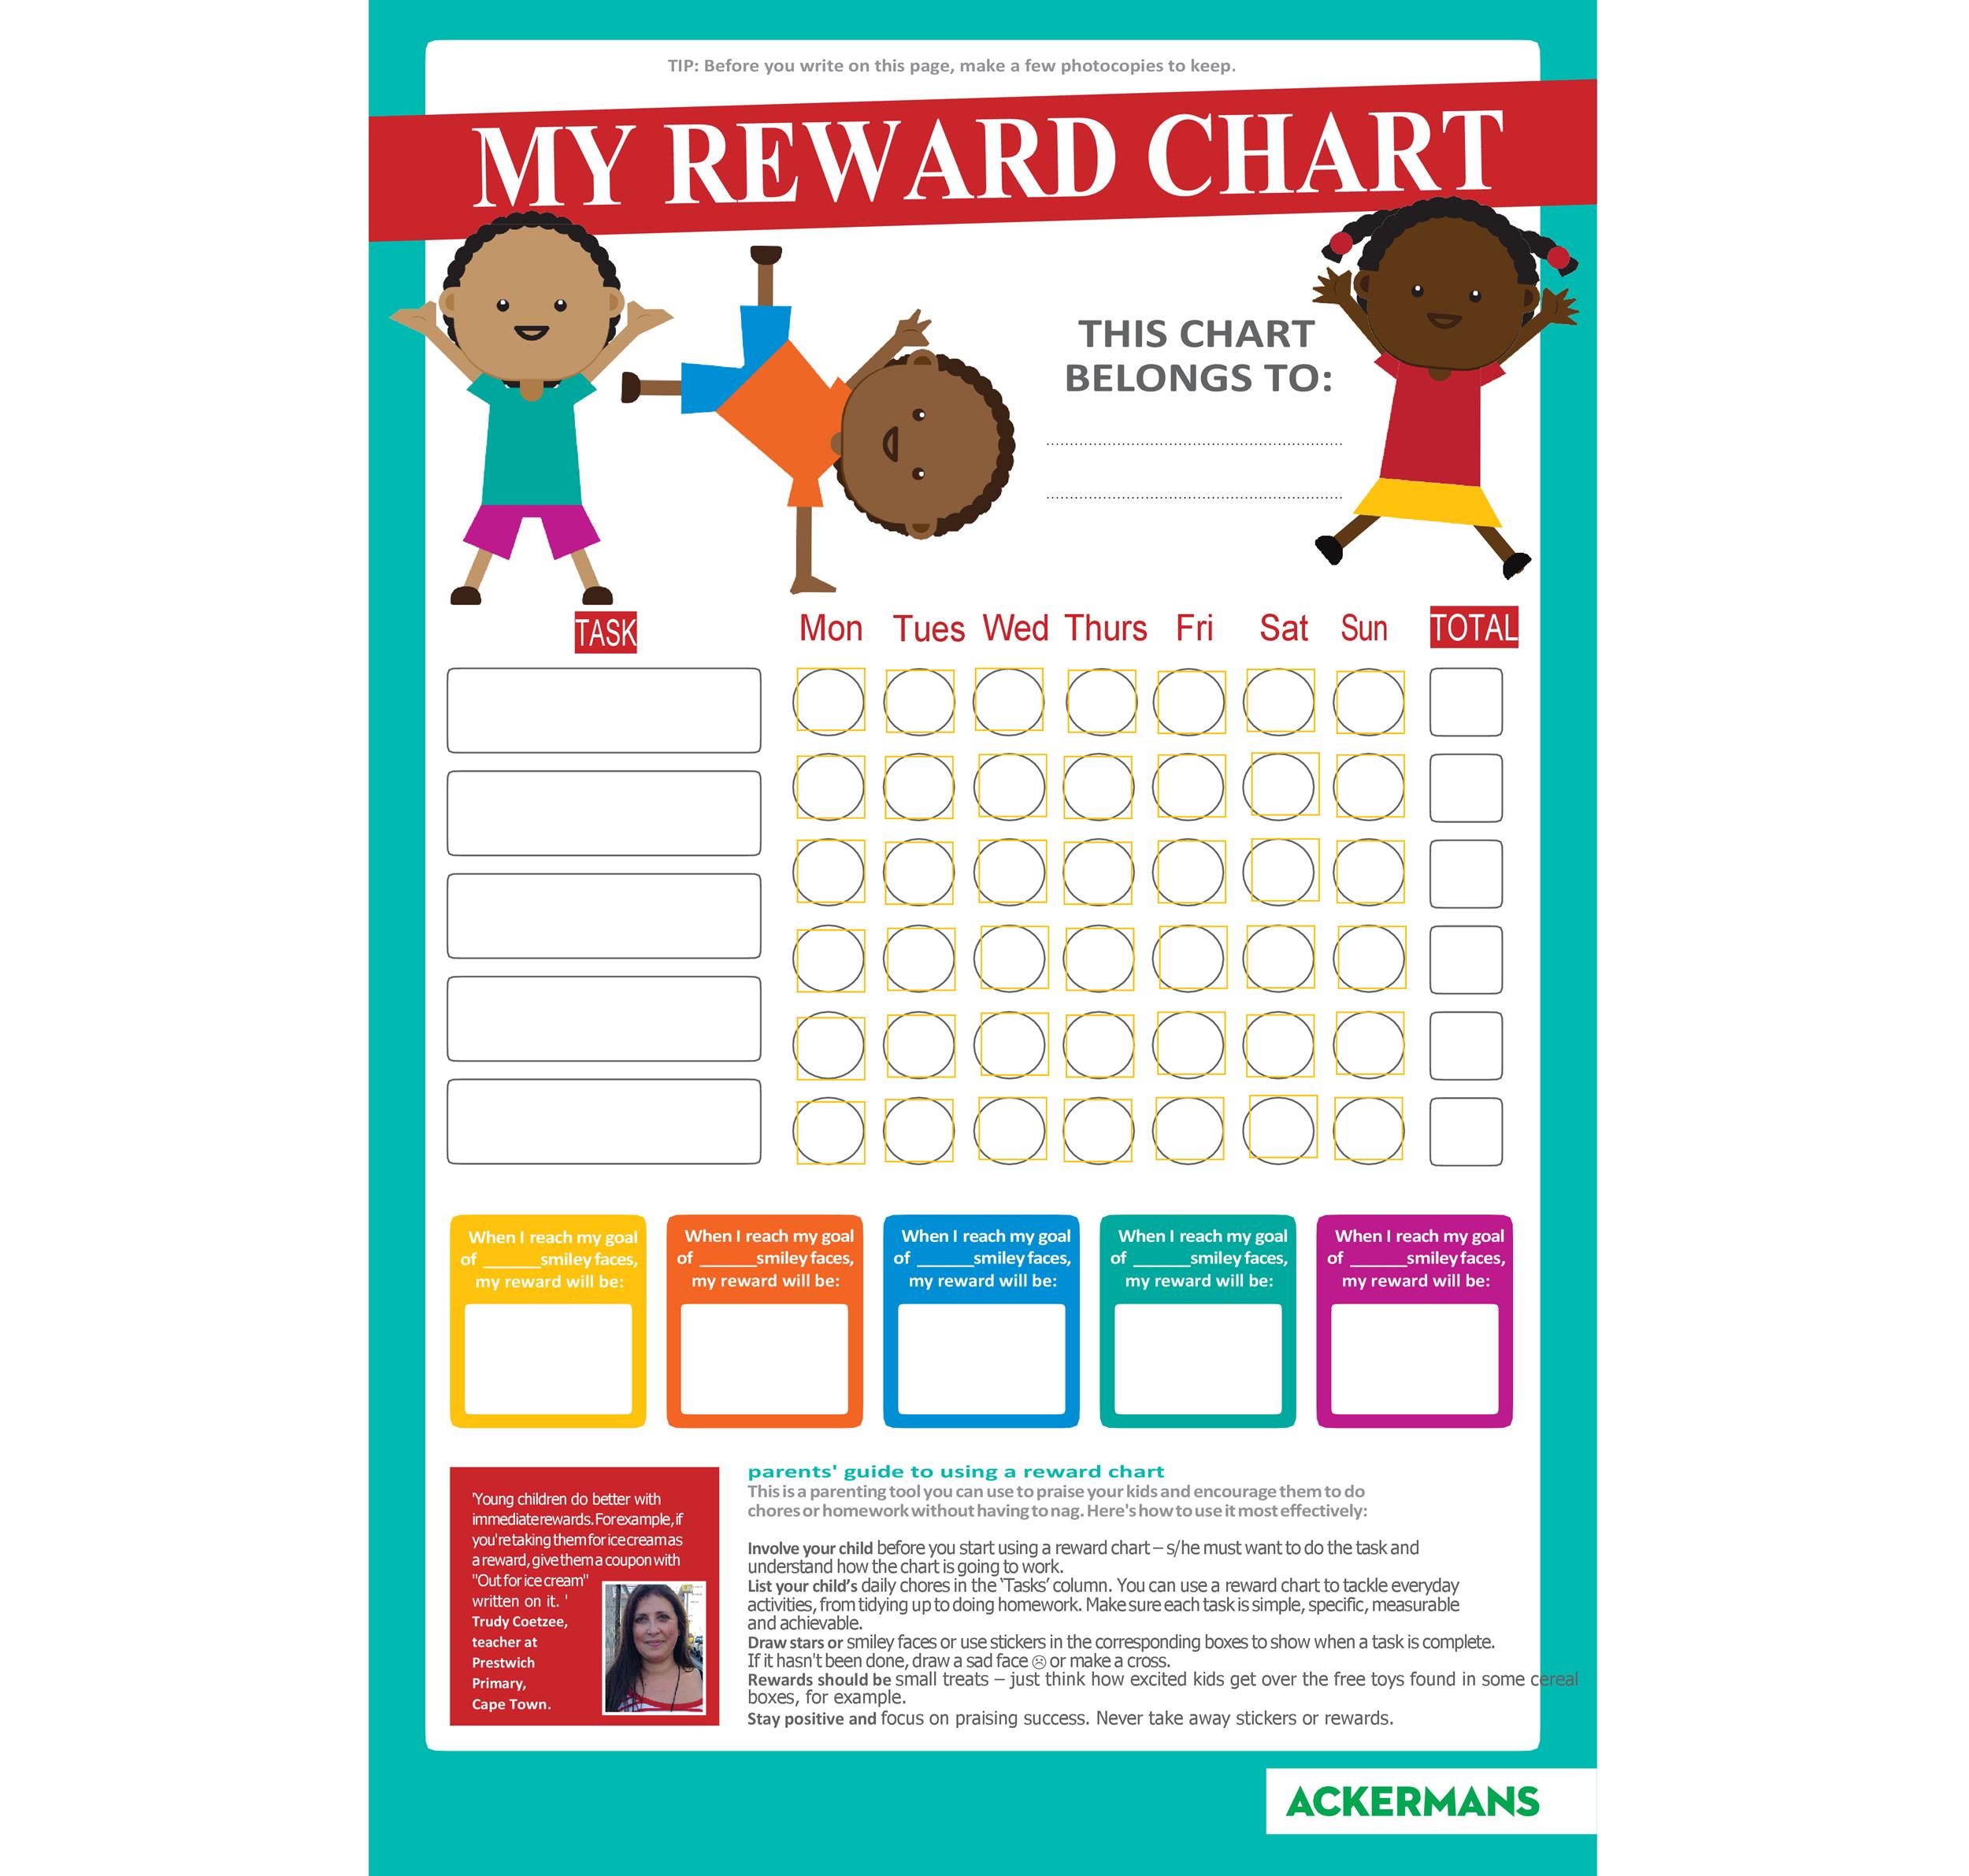 How To Make A Reward Chart